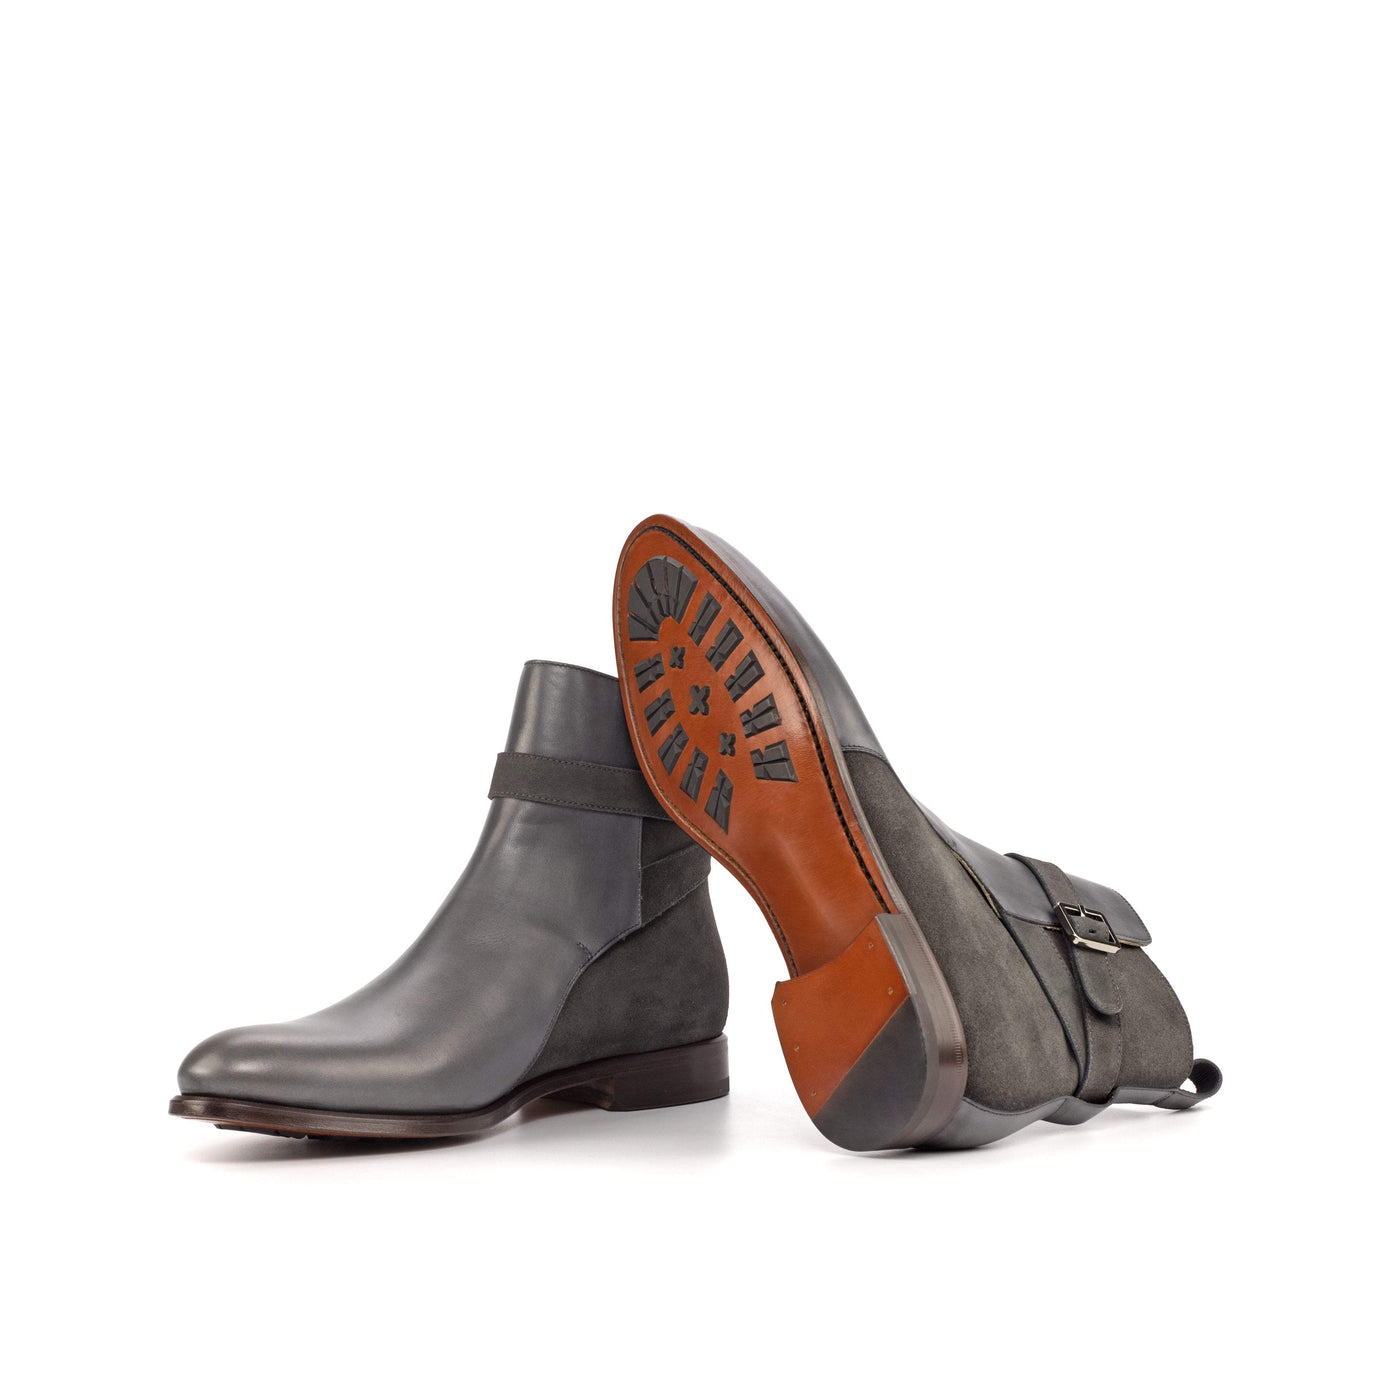 Men's Jodhpur Boots Leather Grey 4599 2- MERRIMIUM